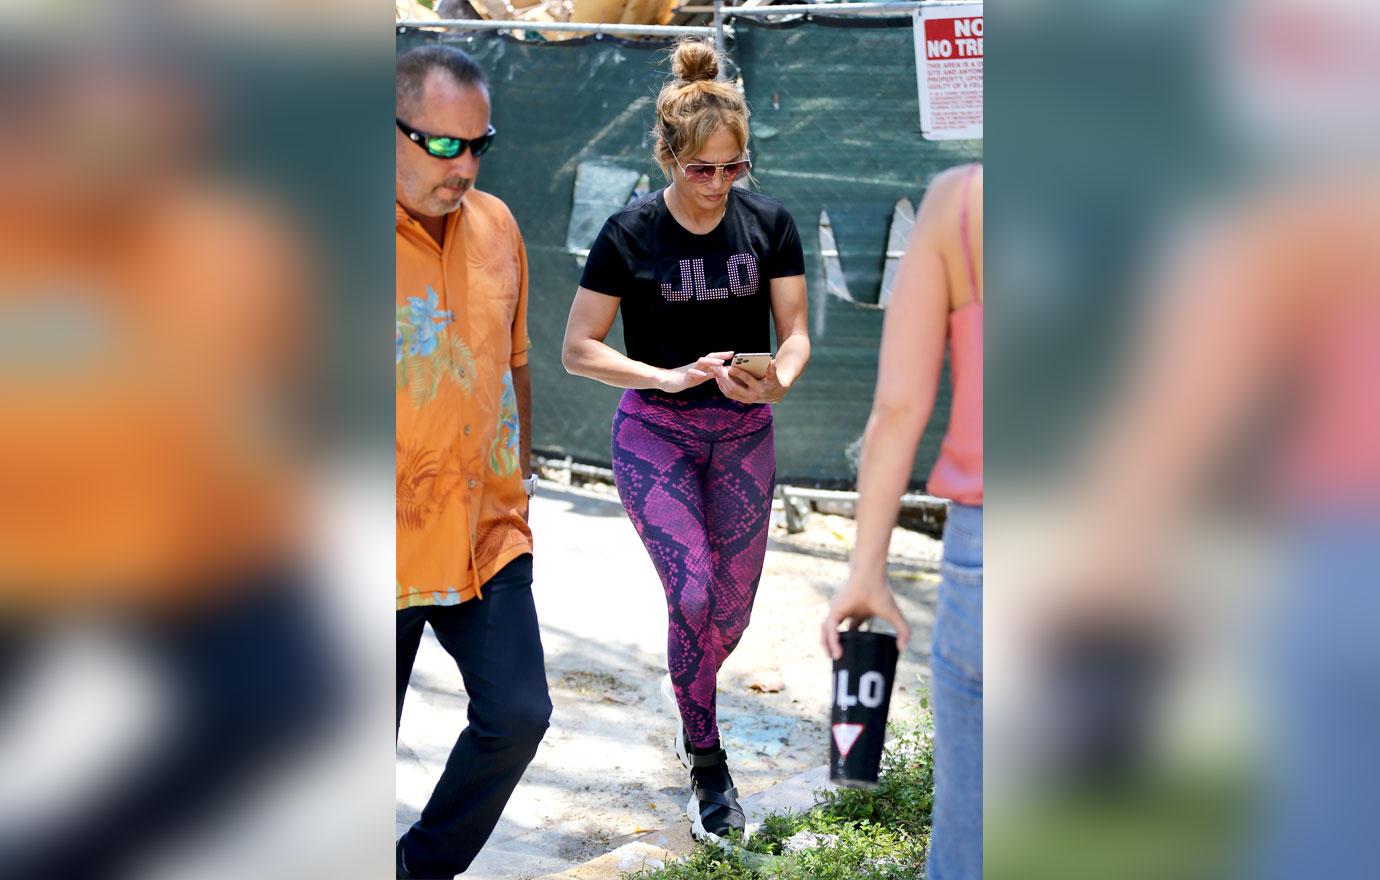 Jennifer Lopez Hits the Gym a Few Days After Her Getaway with Ben Affleck:  Photo 4555712, Jennifer Lopez Photos